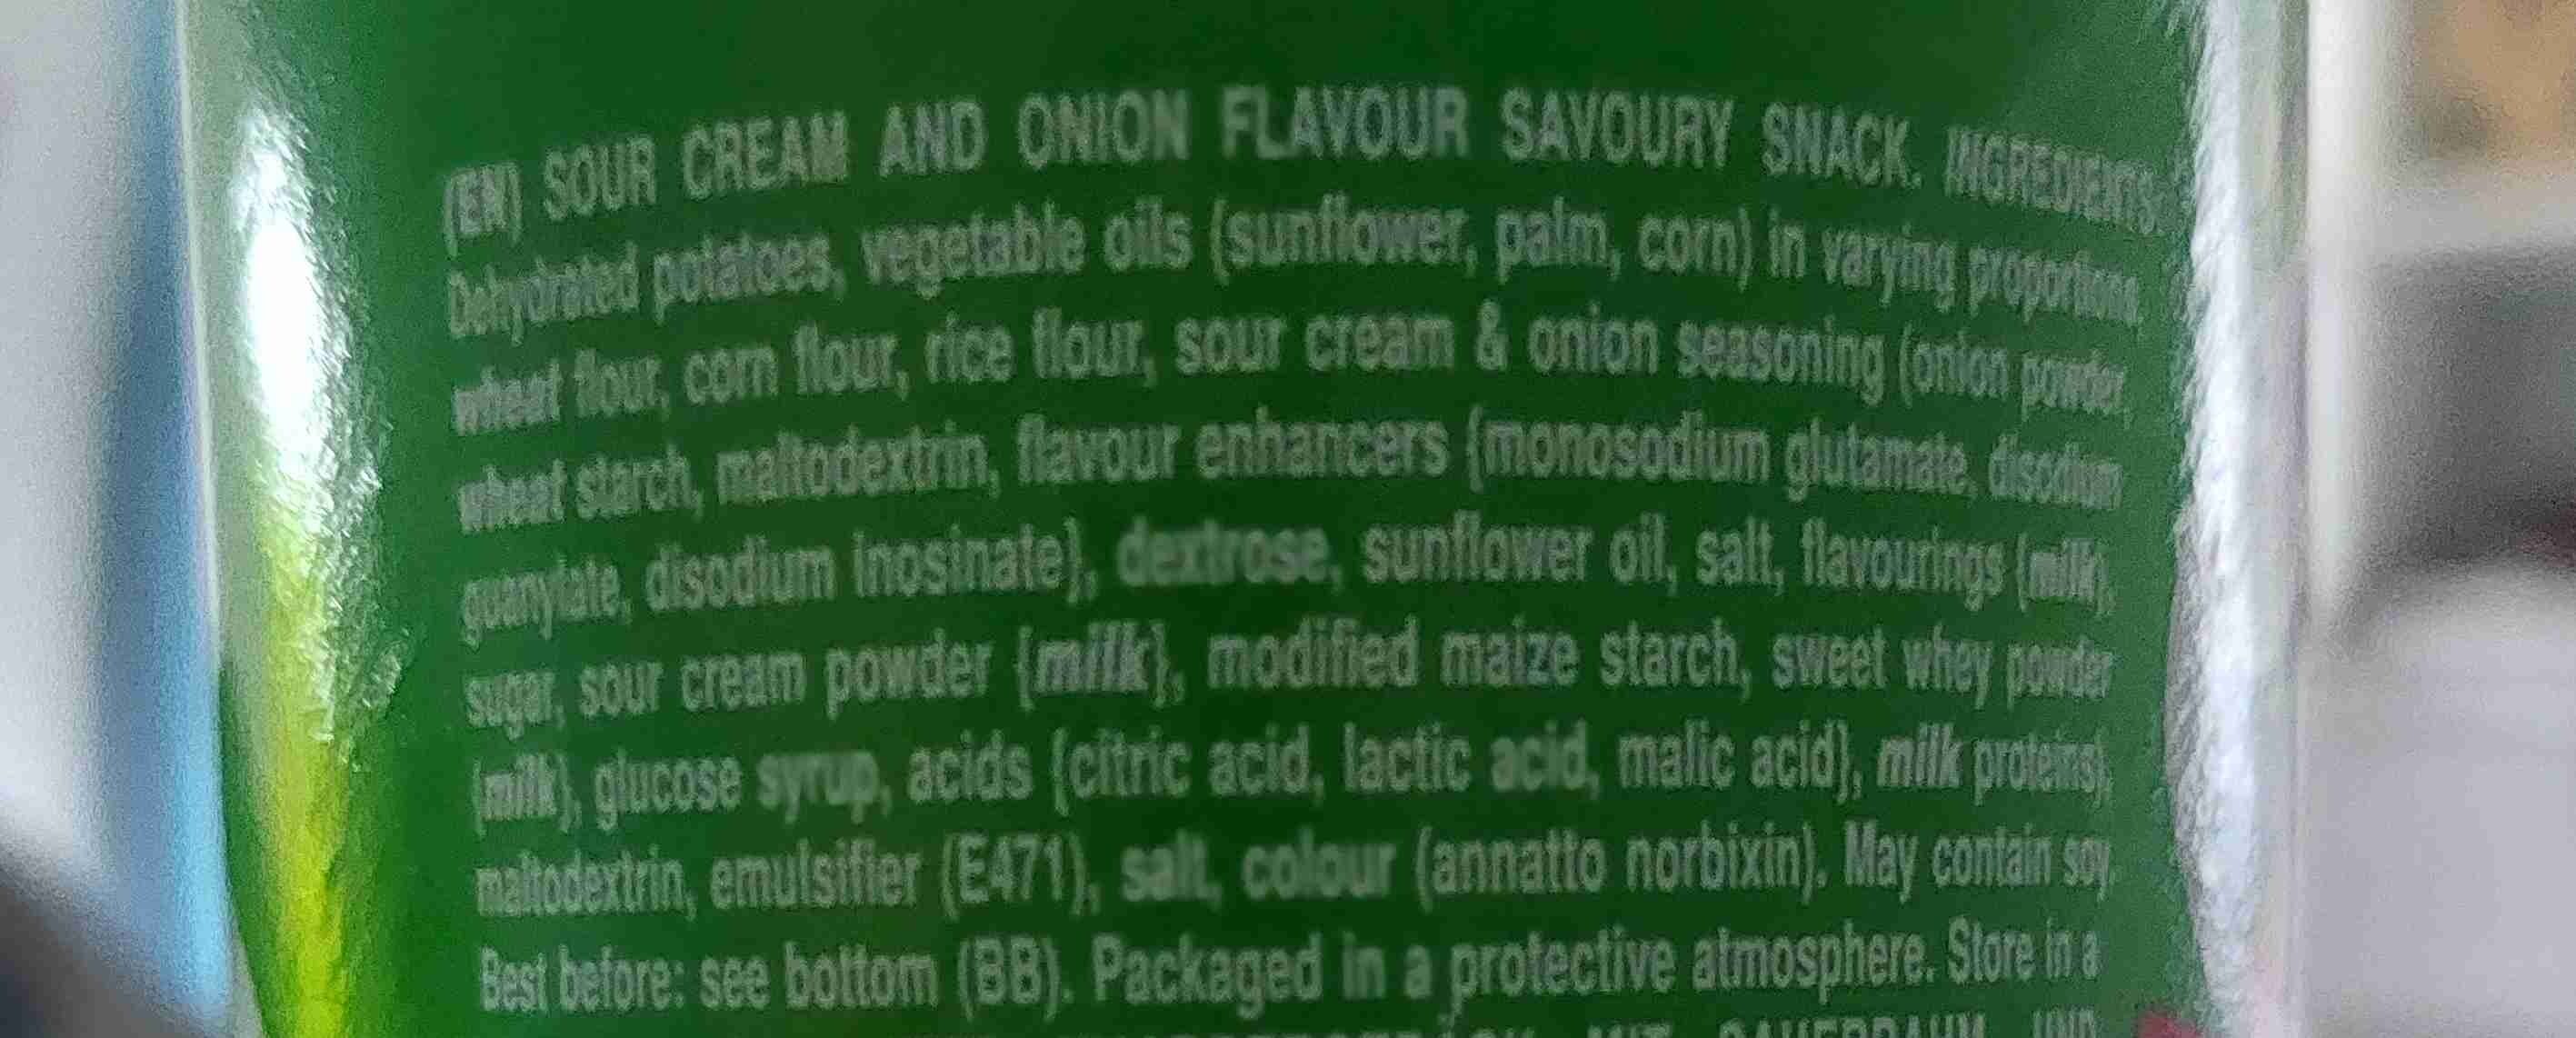 Sour Cream & Onion - Ingredients